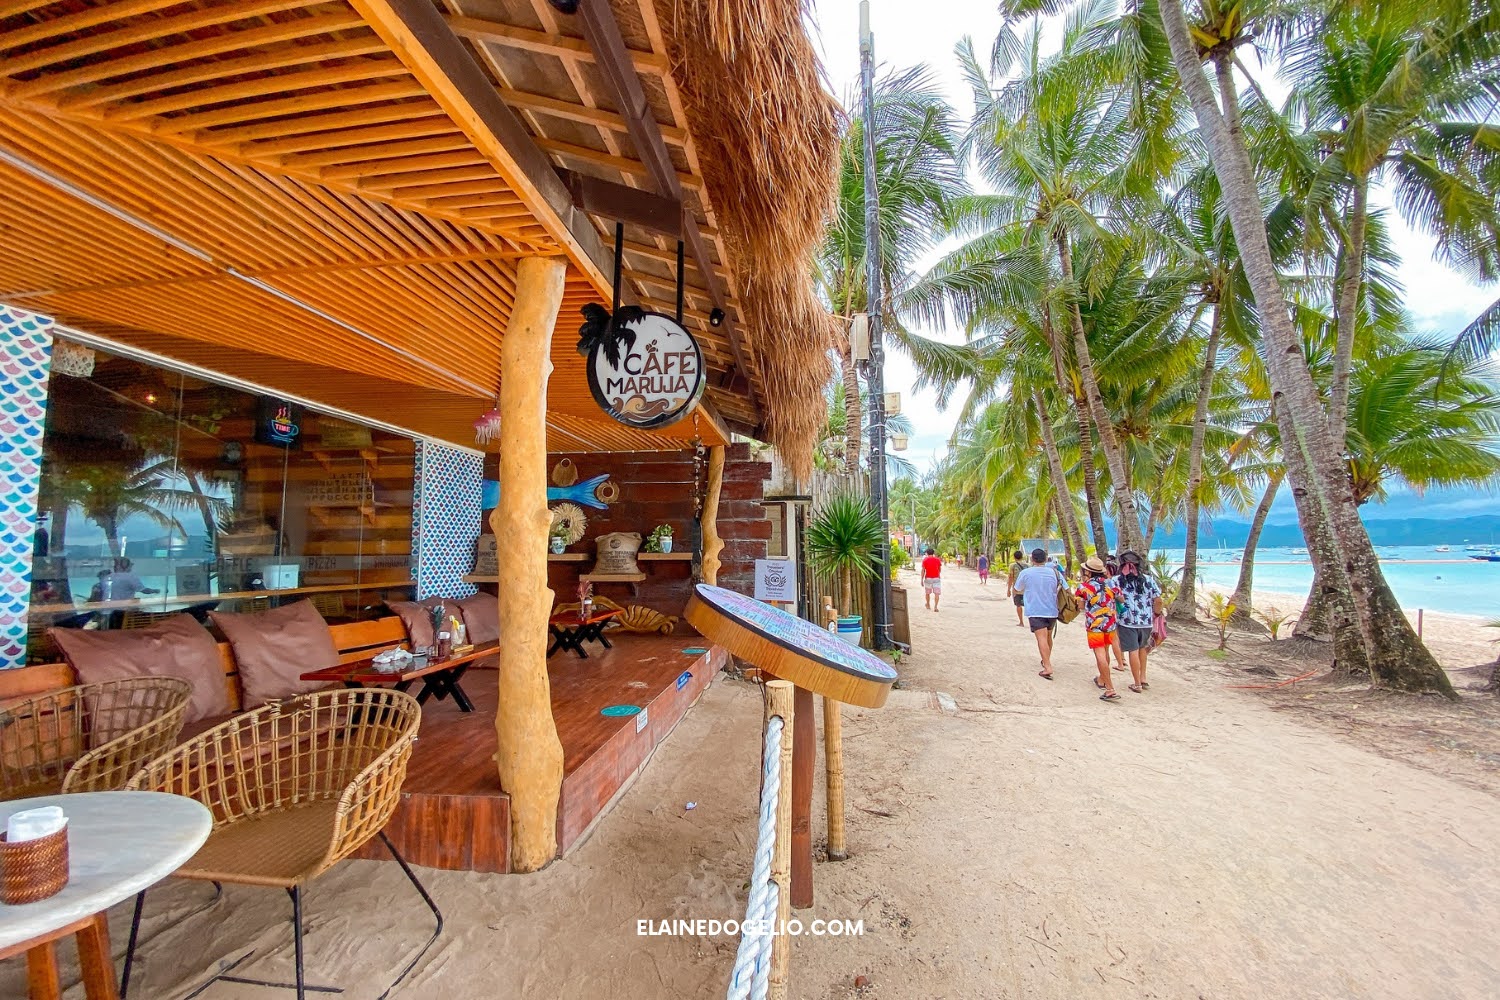 Cafe Maruja: A Cozy Beachfront Cafe in Boracay